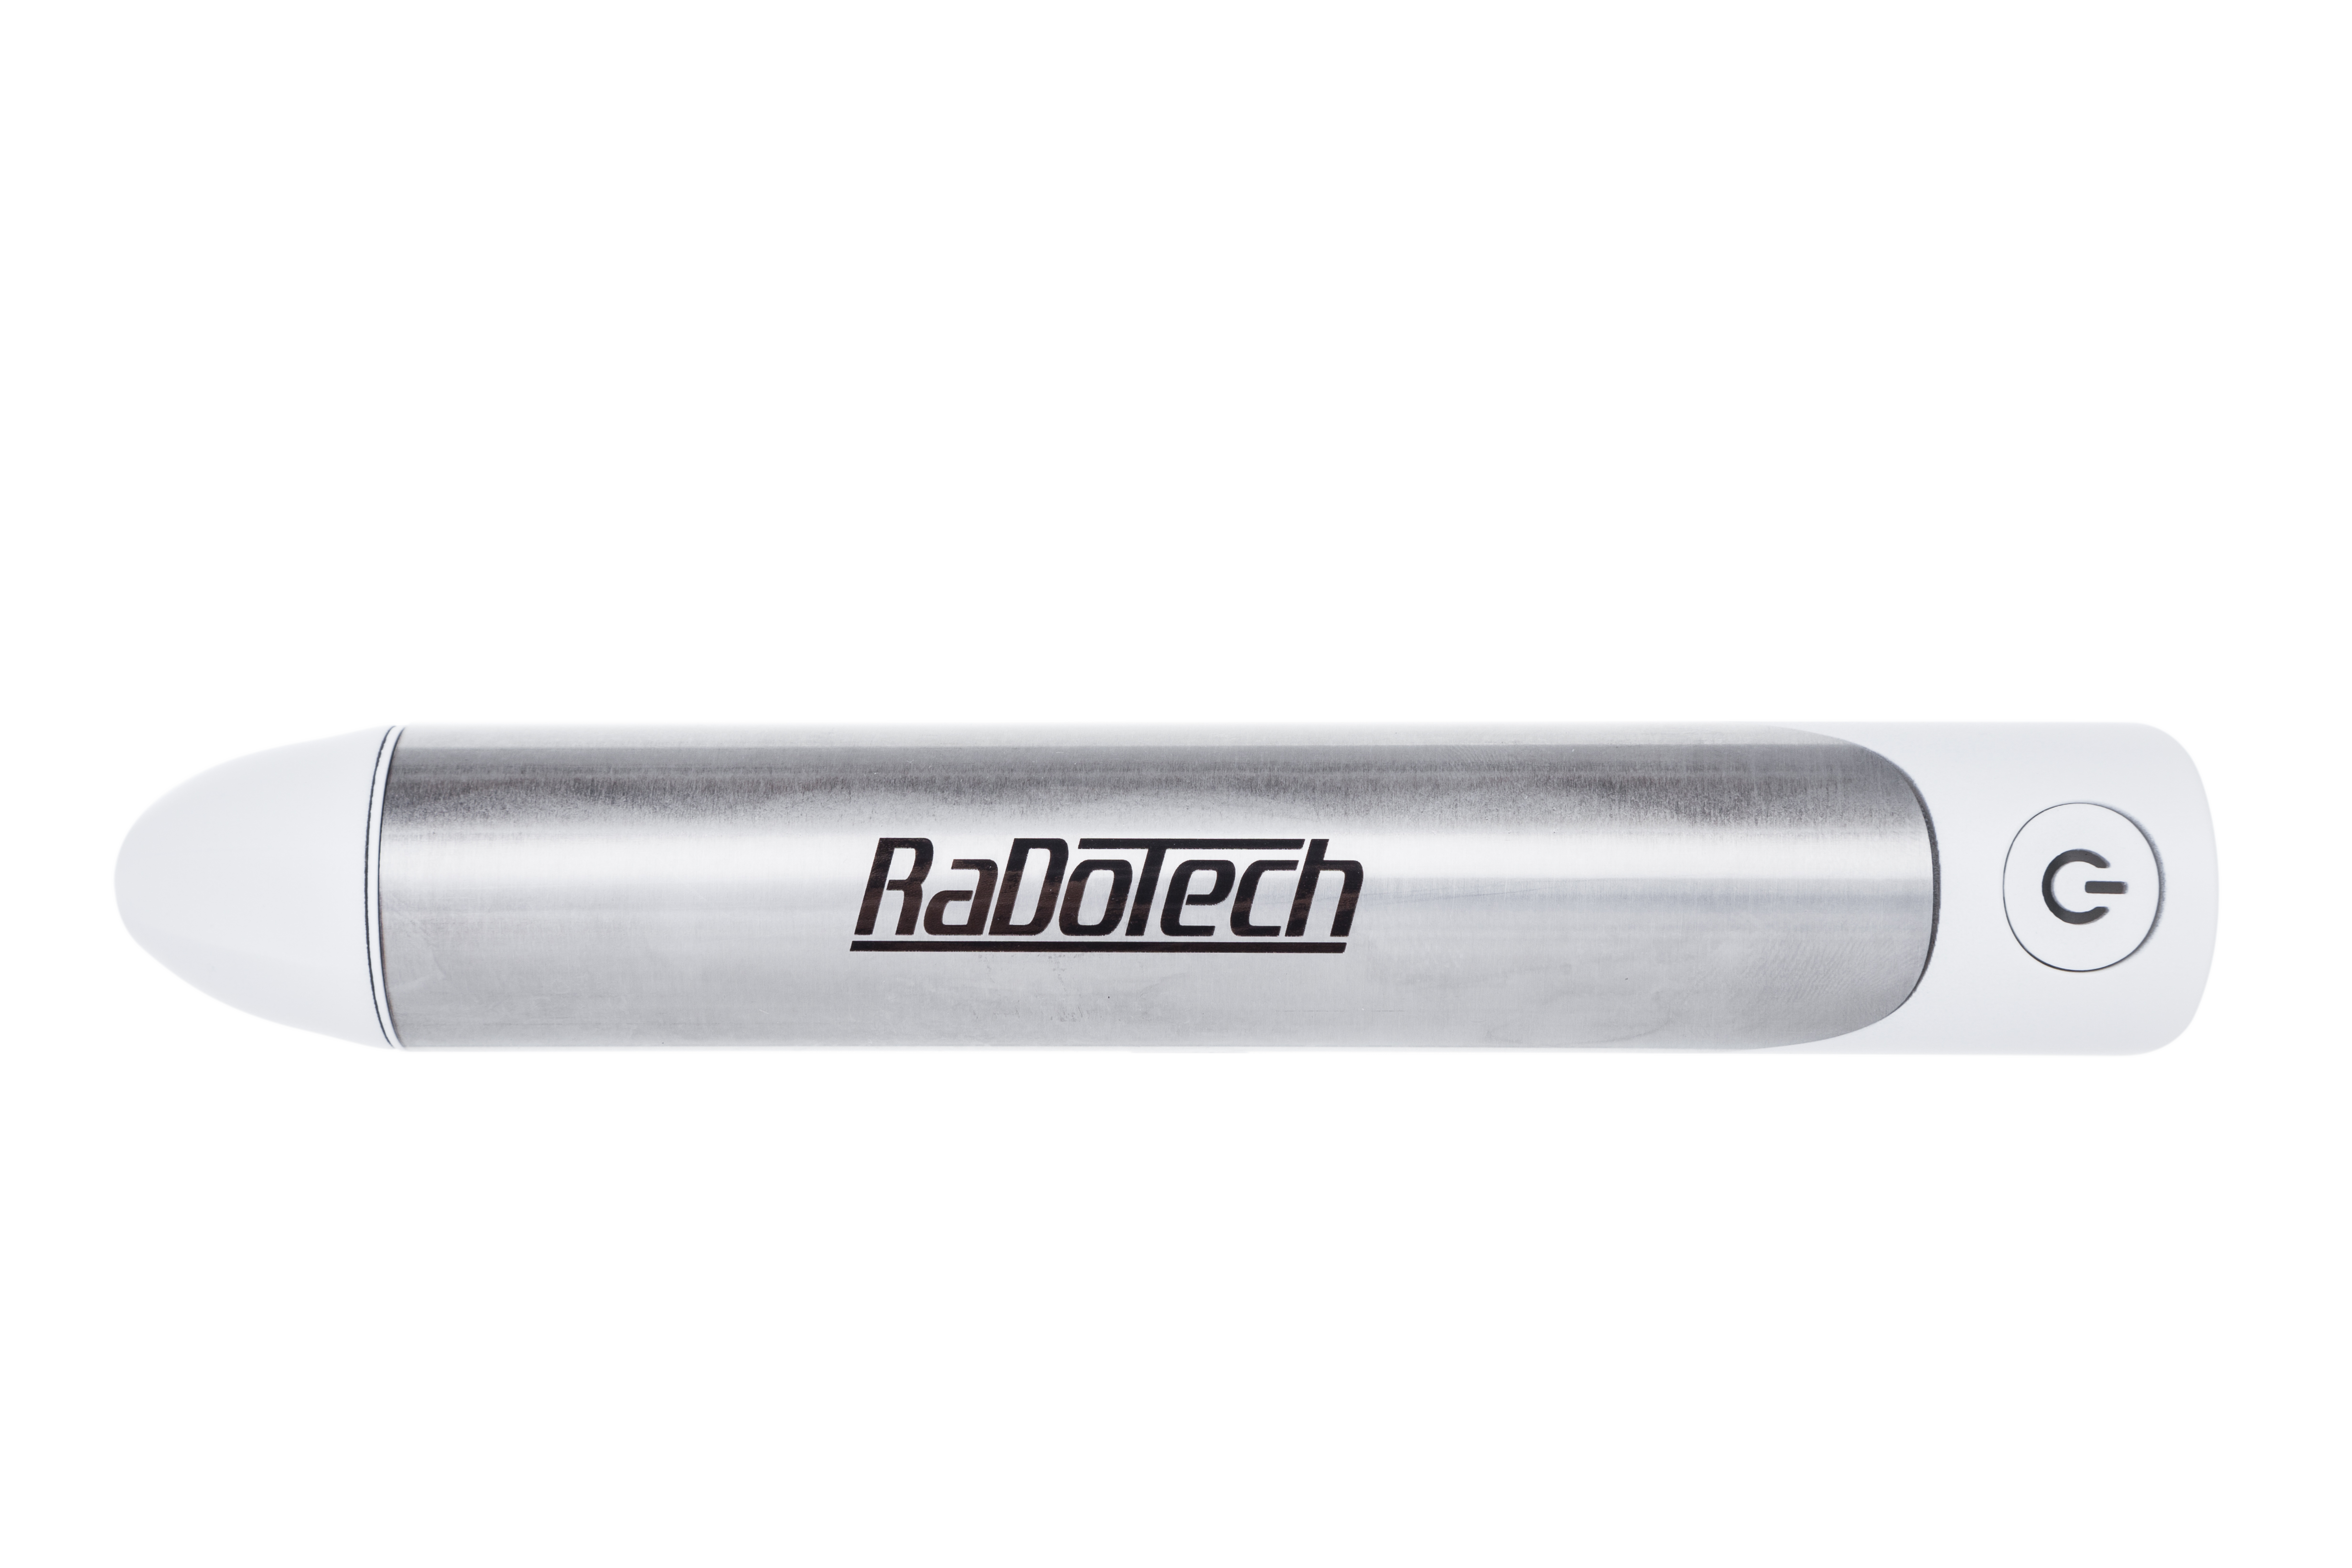 The RaDoTech - Holistic Health Tracker